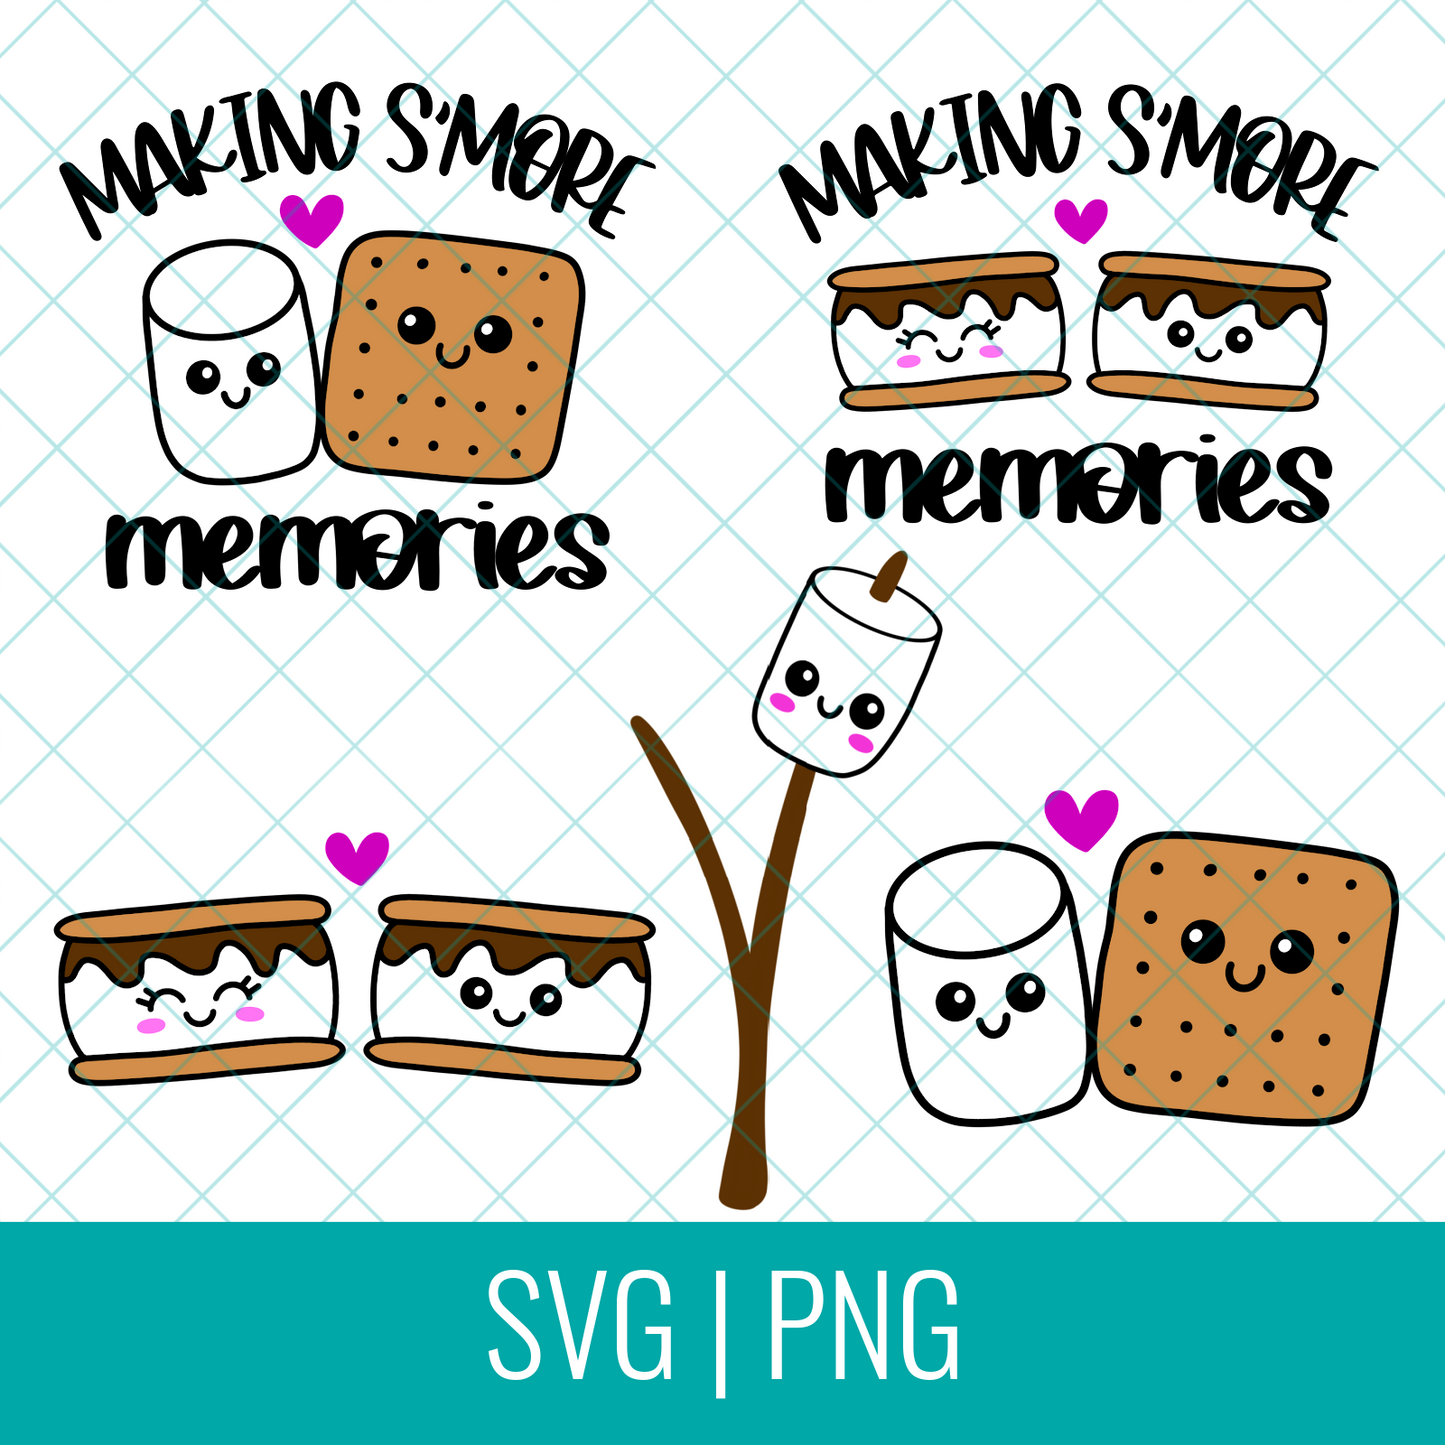 Cute Kawaii Camping S'mores Bundle SVG Cut File and PNG